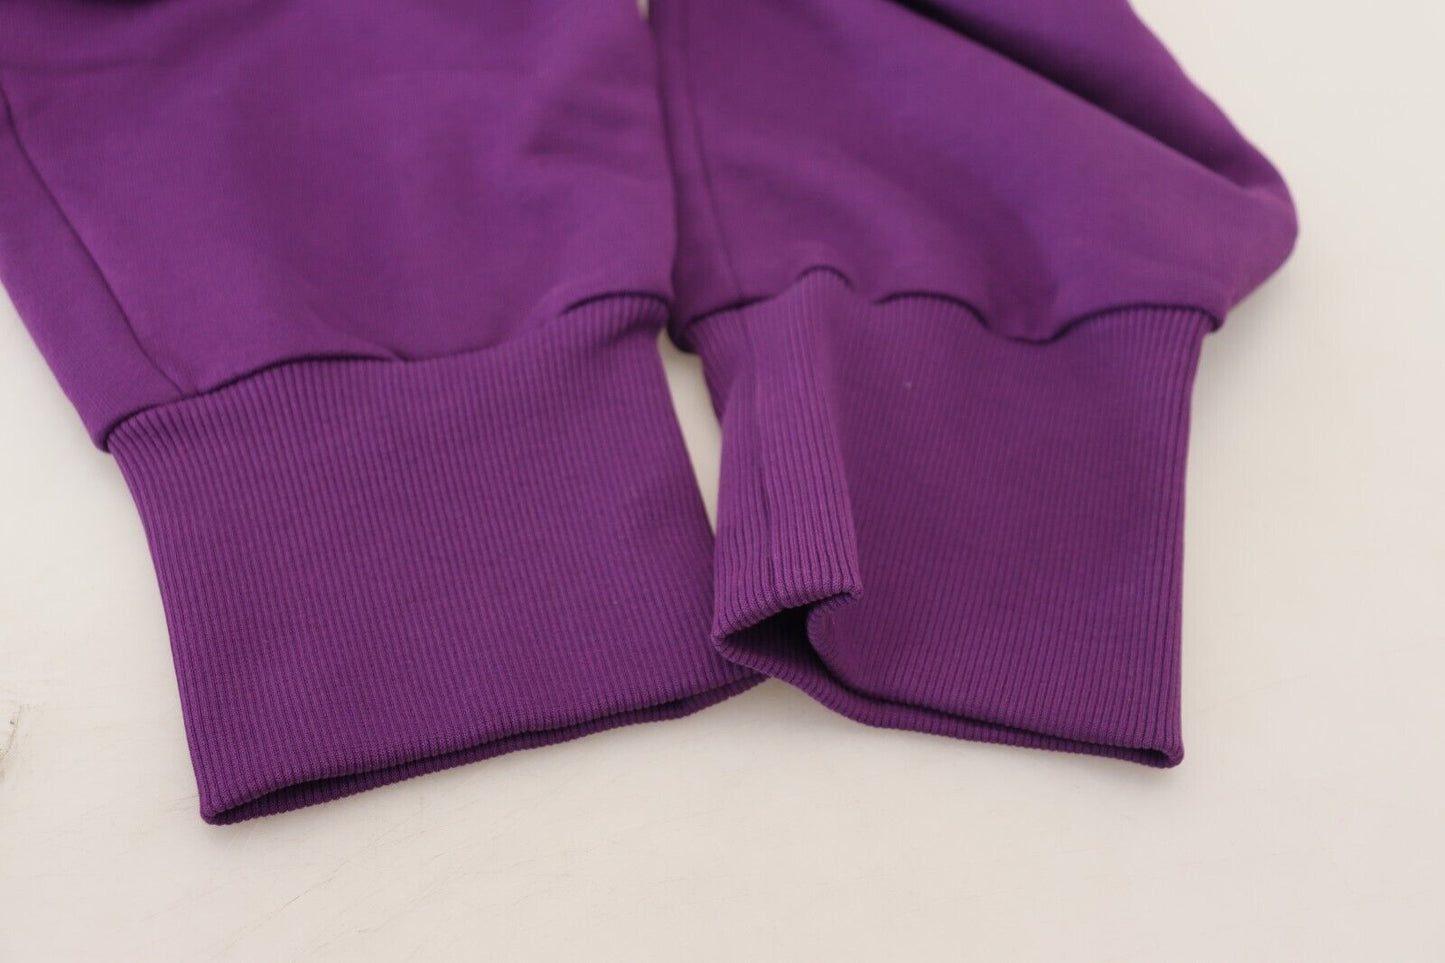 Elegant Purple Cotton Cargo Sweatpants